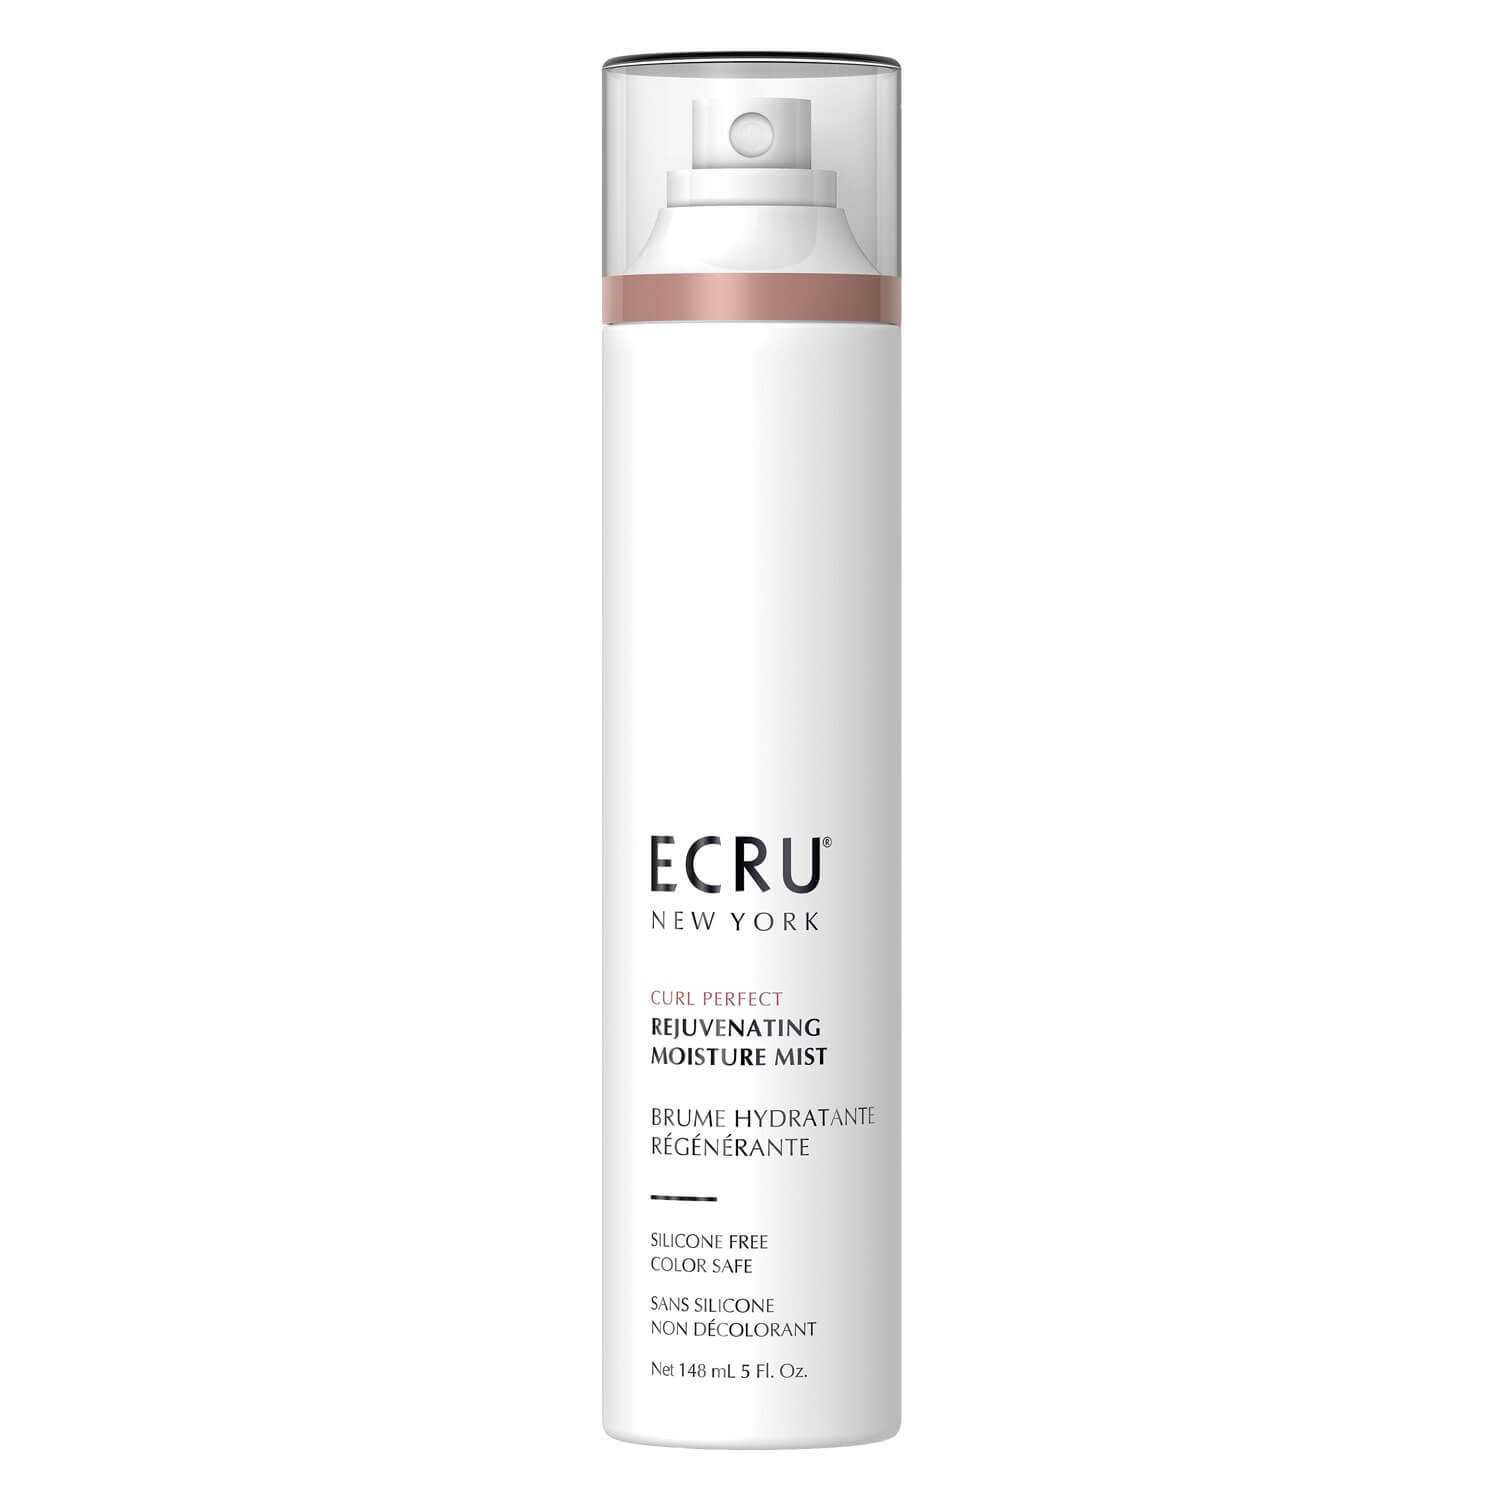 Produktbild von ECRU NY Curl Perfect - Rejuvenating Moisture Mist